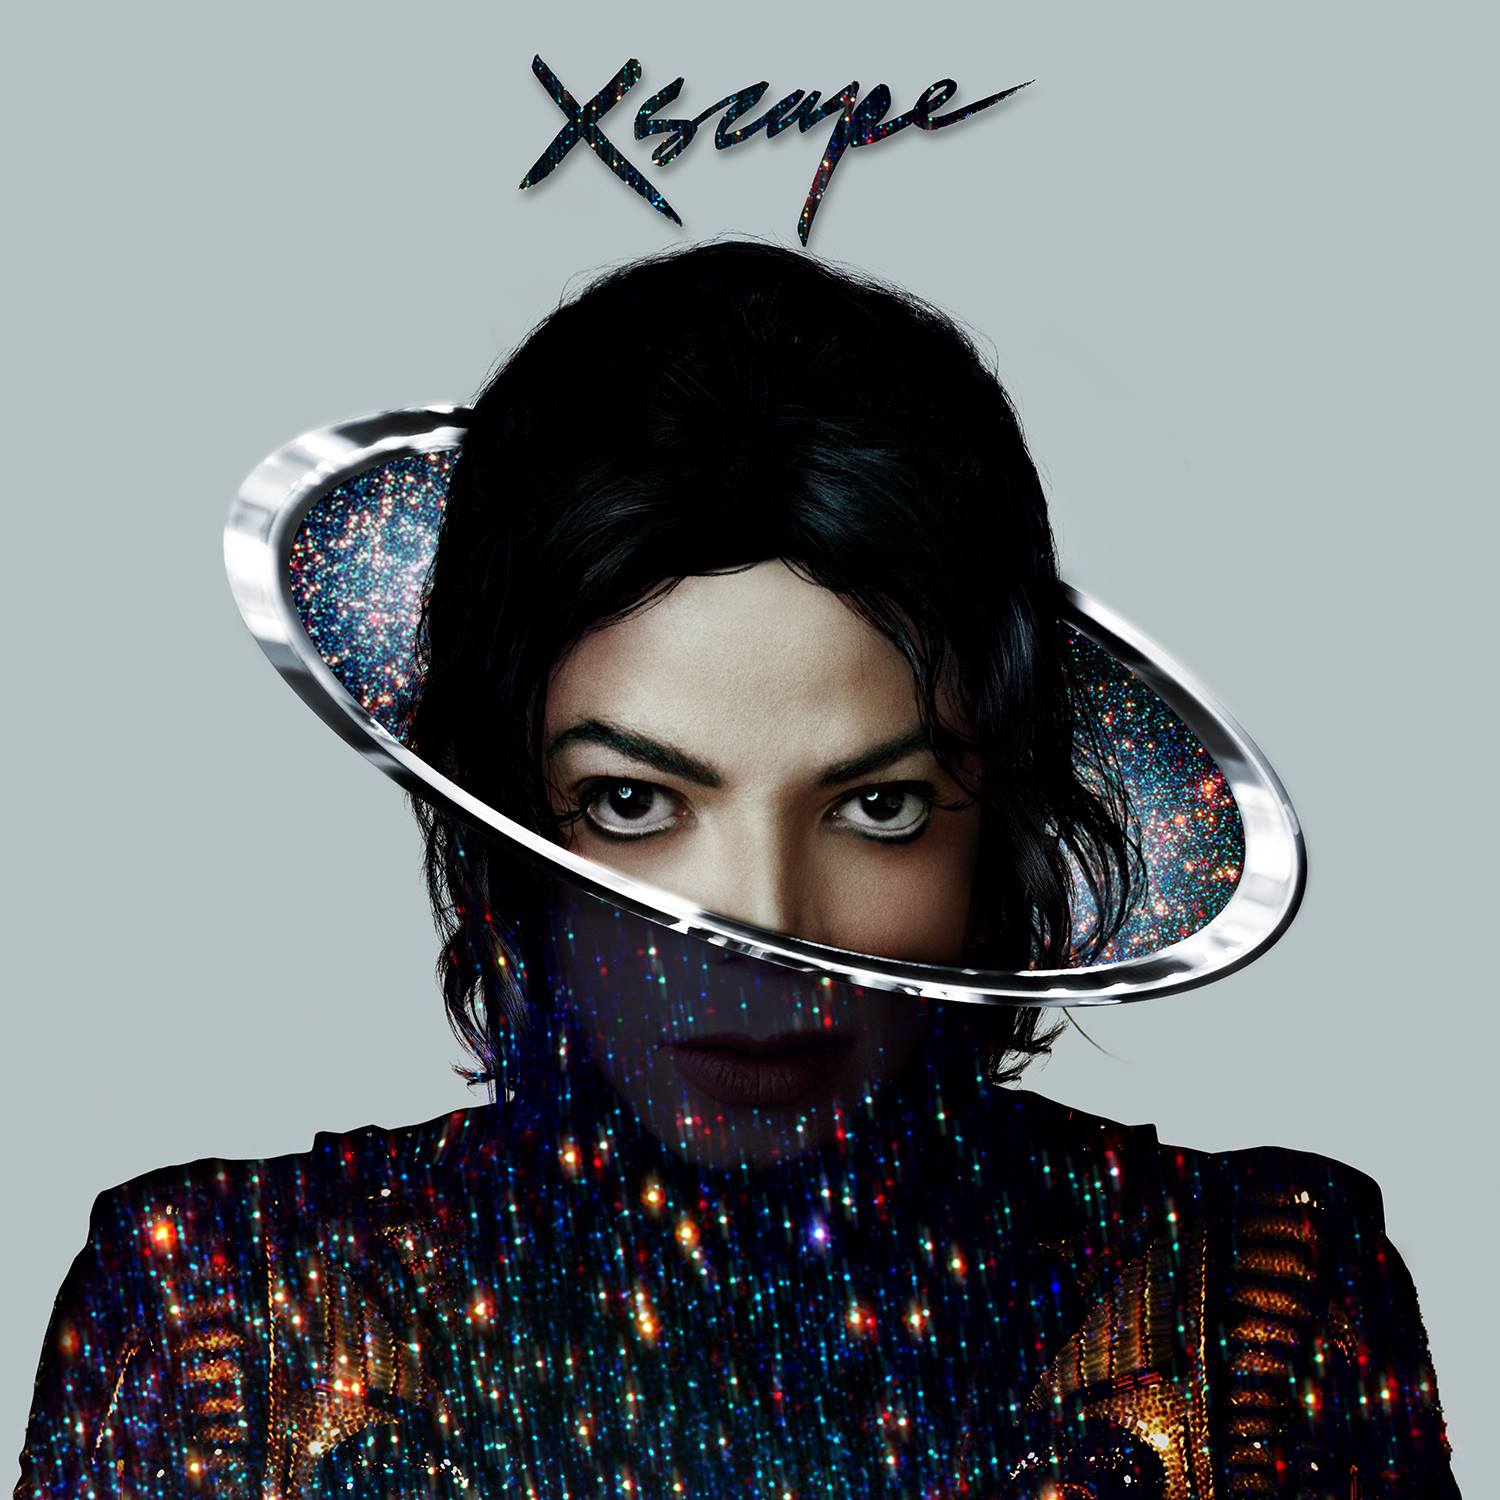 Cover of the new Michael Jackson album Xscape